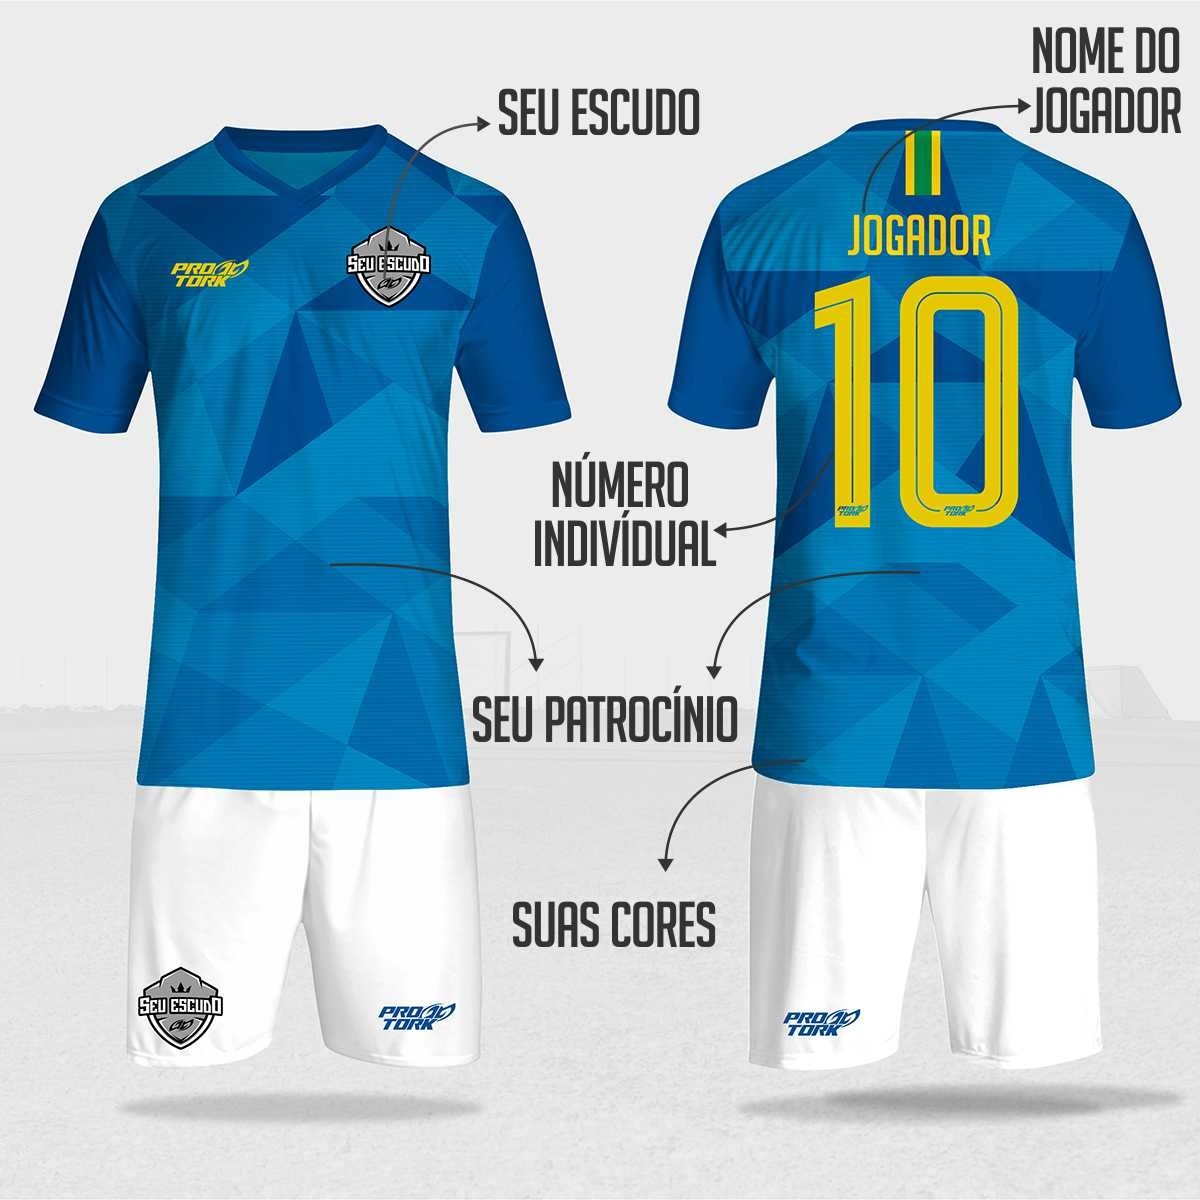 Camisa De Time Personalizada 10un Futebol Ou Futsal - R$ 350,00 em Mercado Livre